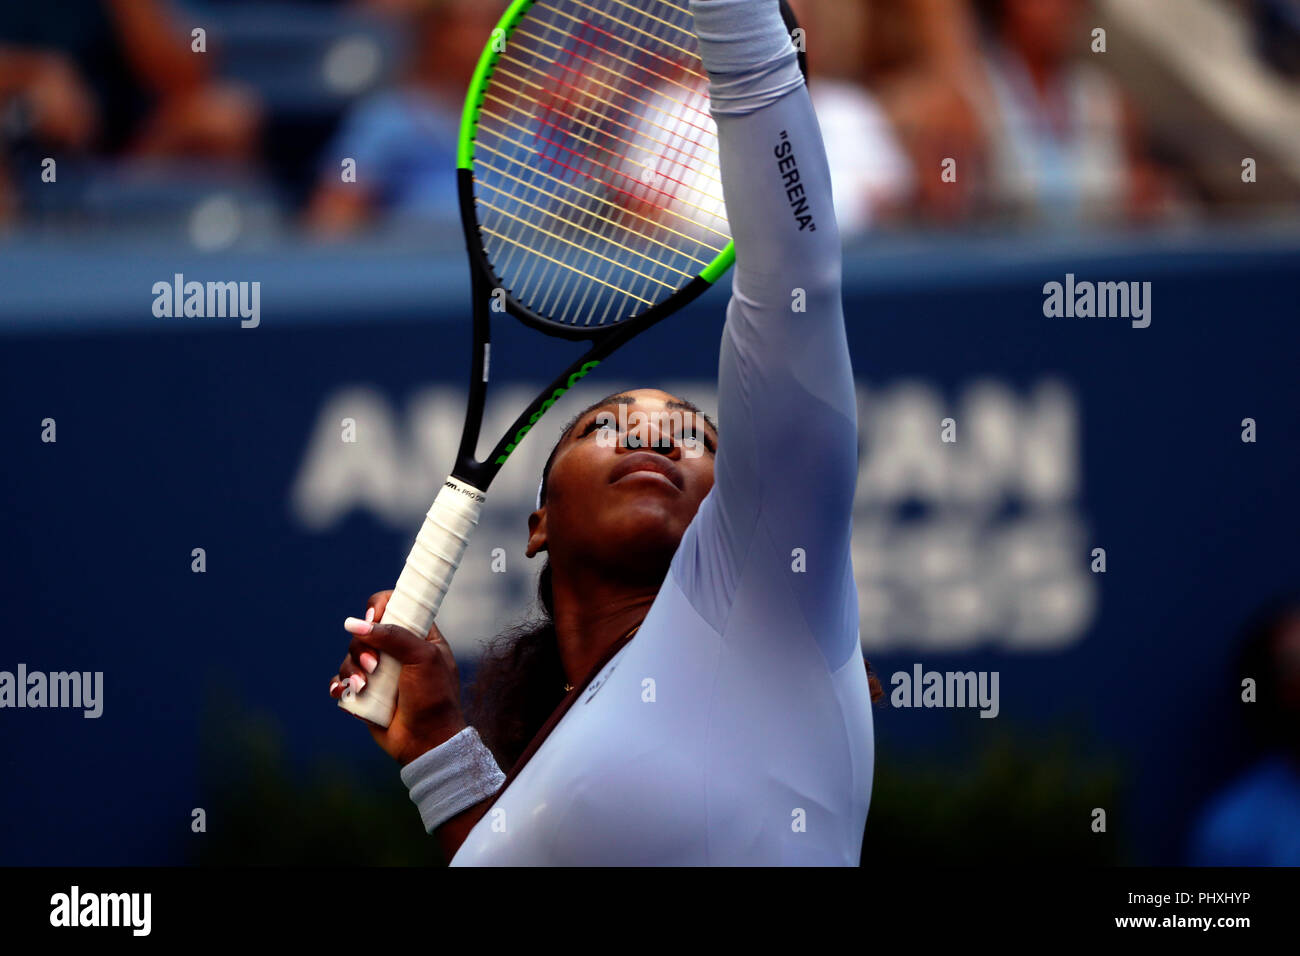 New York, United States. 02nd Sep, 2018. Flushing Meadows, New York -  September 2, 2018: US Open Tennis: Serena Williams serving to Kala Kanepi  of Estonia during their fourth round match at